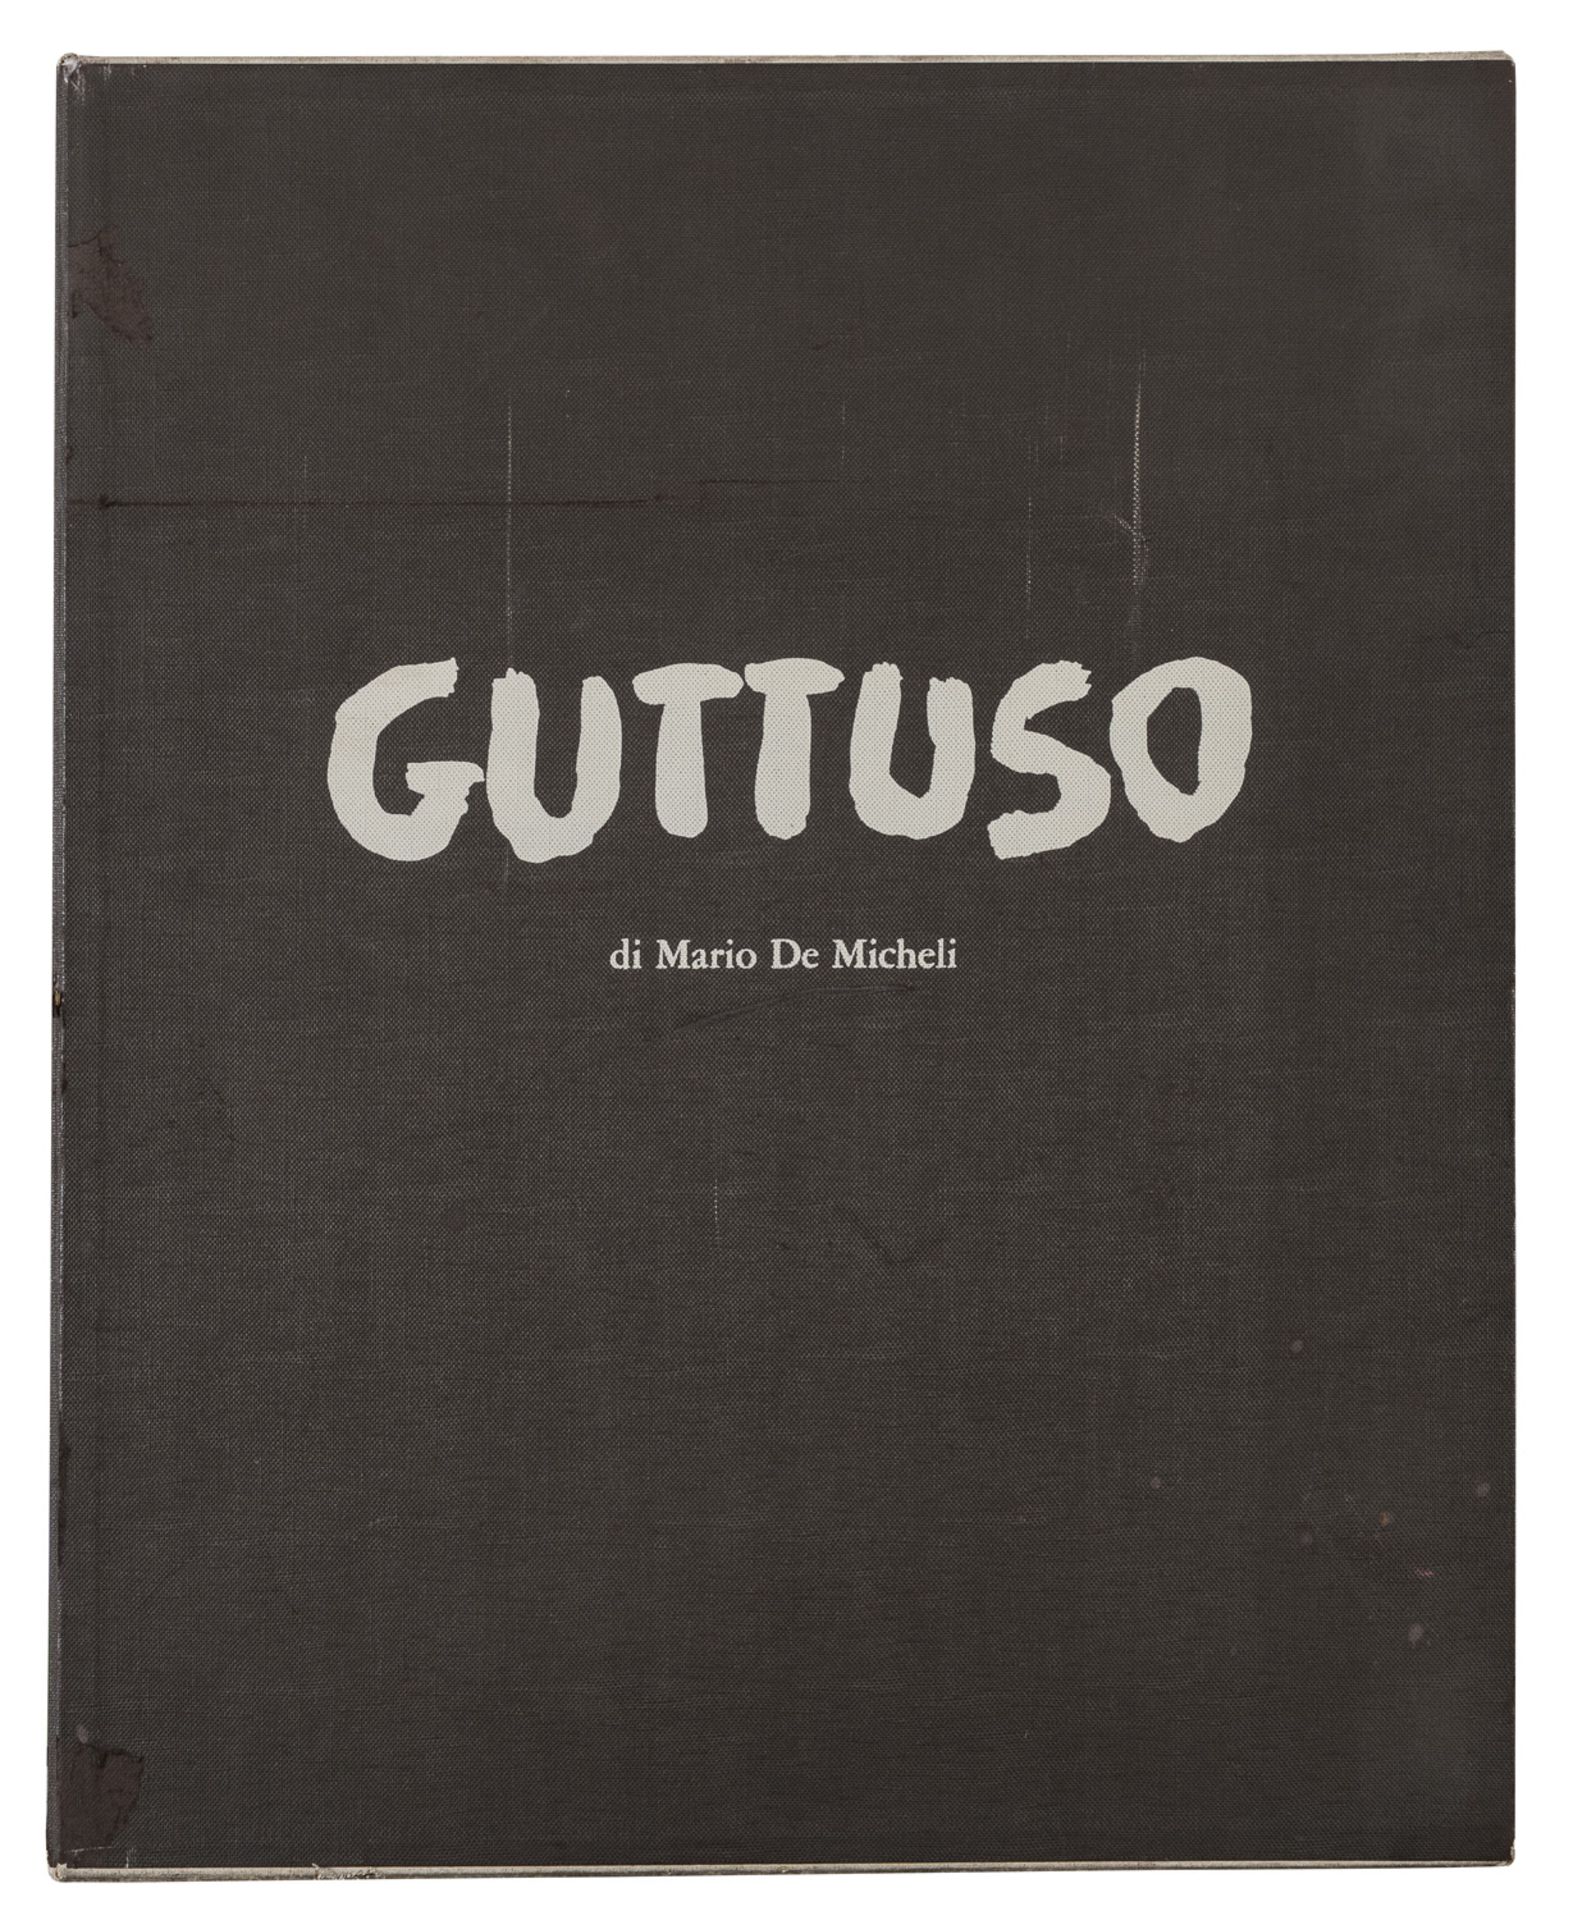 VOLUME THE MODERN DRAWING BY RENATO GUTTUSO